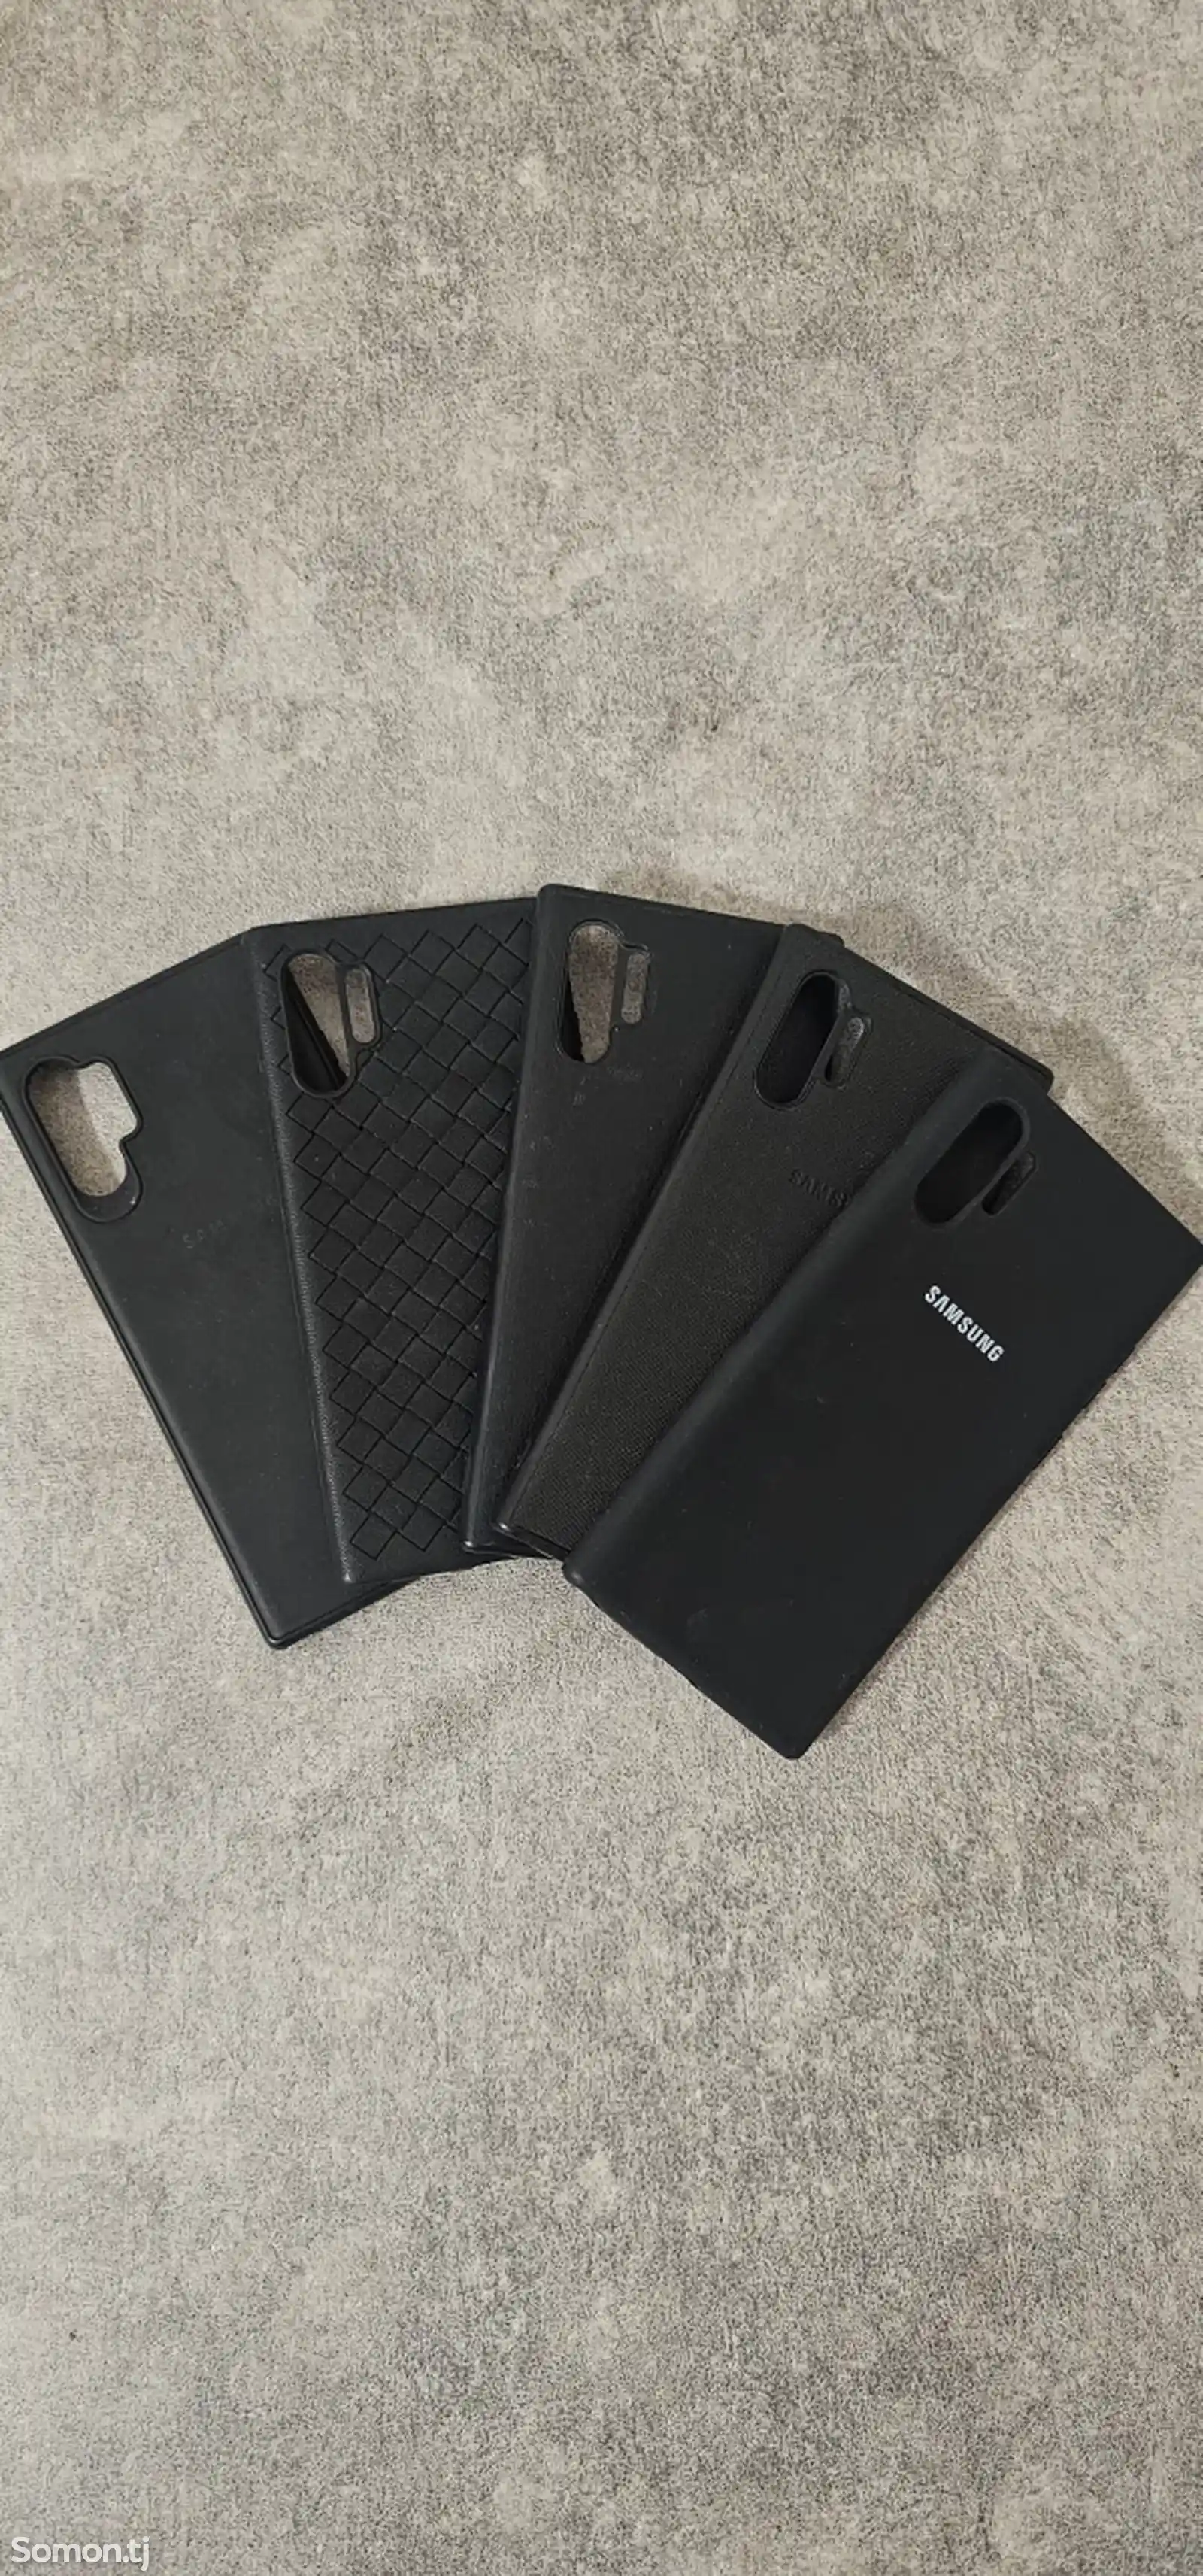 Samsung Galaxy Note 10 Plus Duos-5